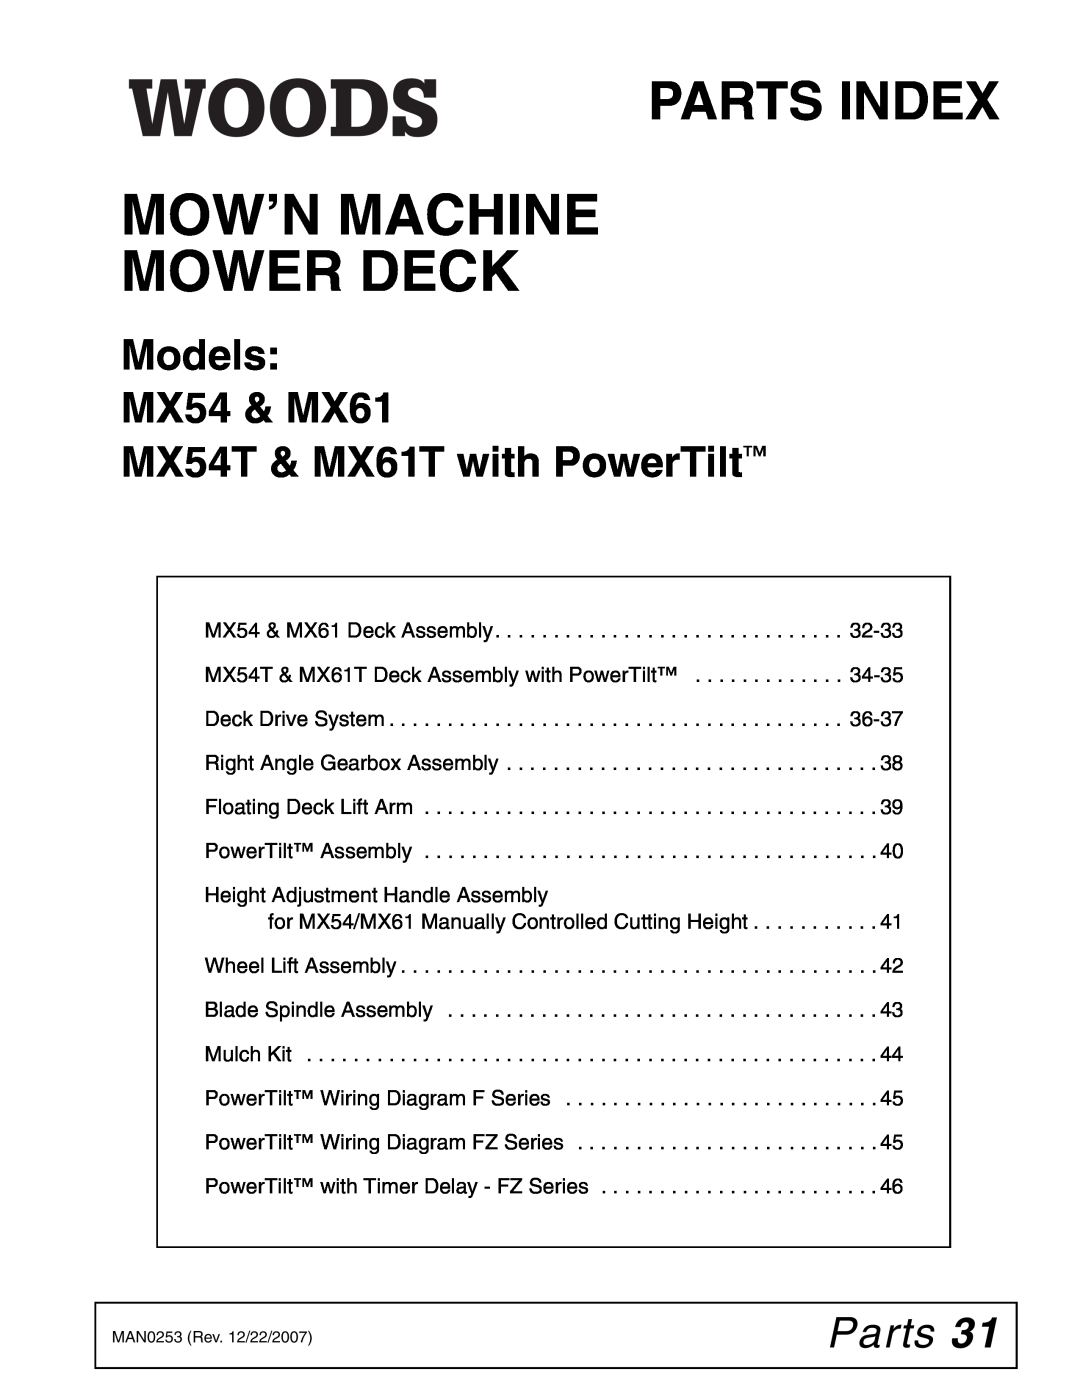 Woods Equipment manual Mow’N Machine Mower Deck, Parts Index, Models MX54 & MX61 MX54T & MX61T with PowerTilt 